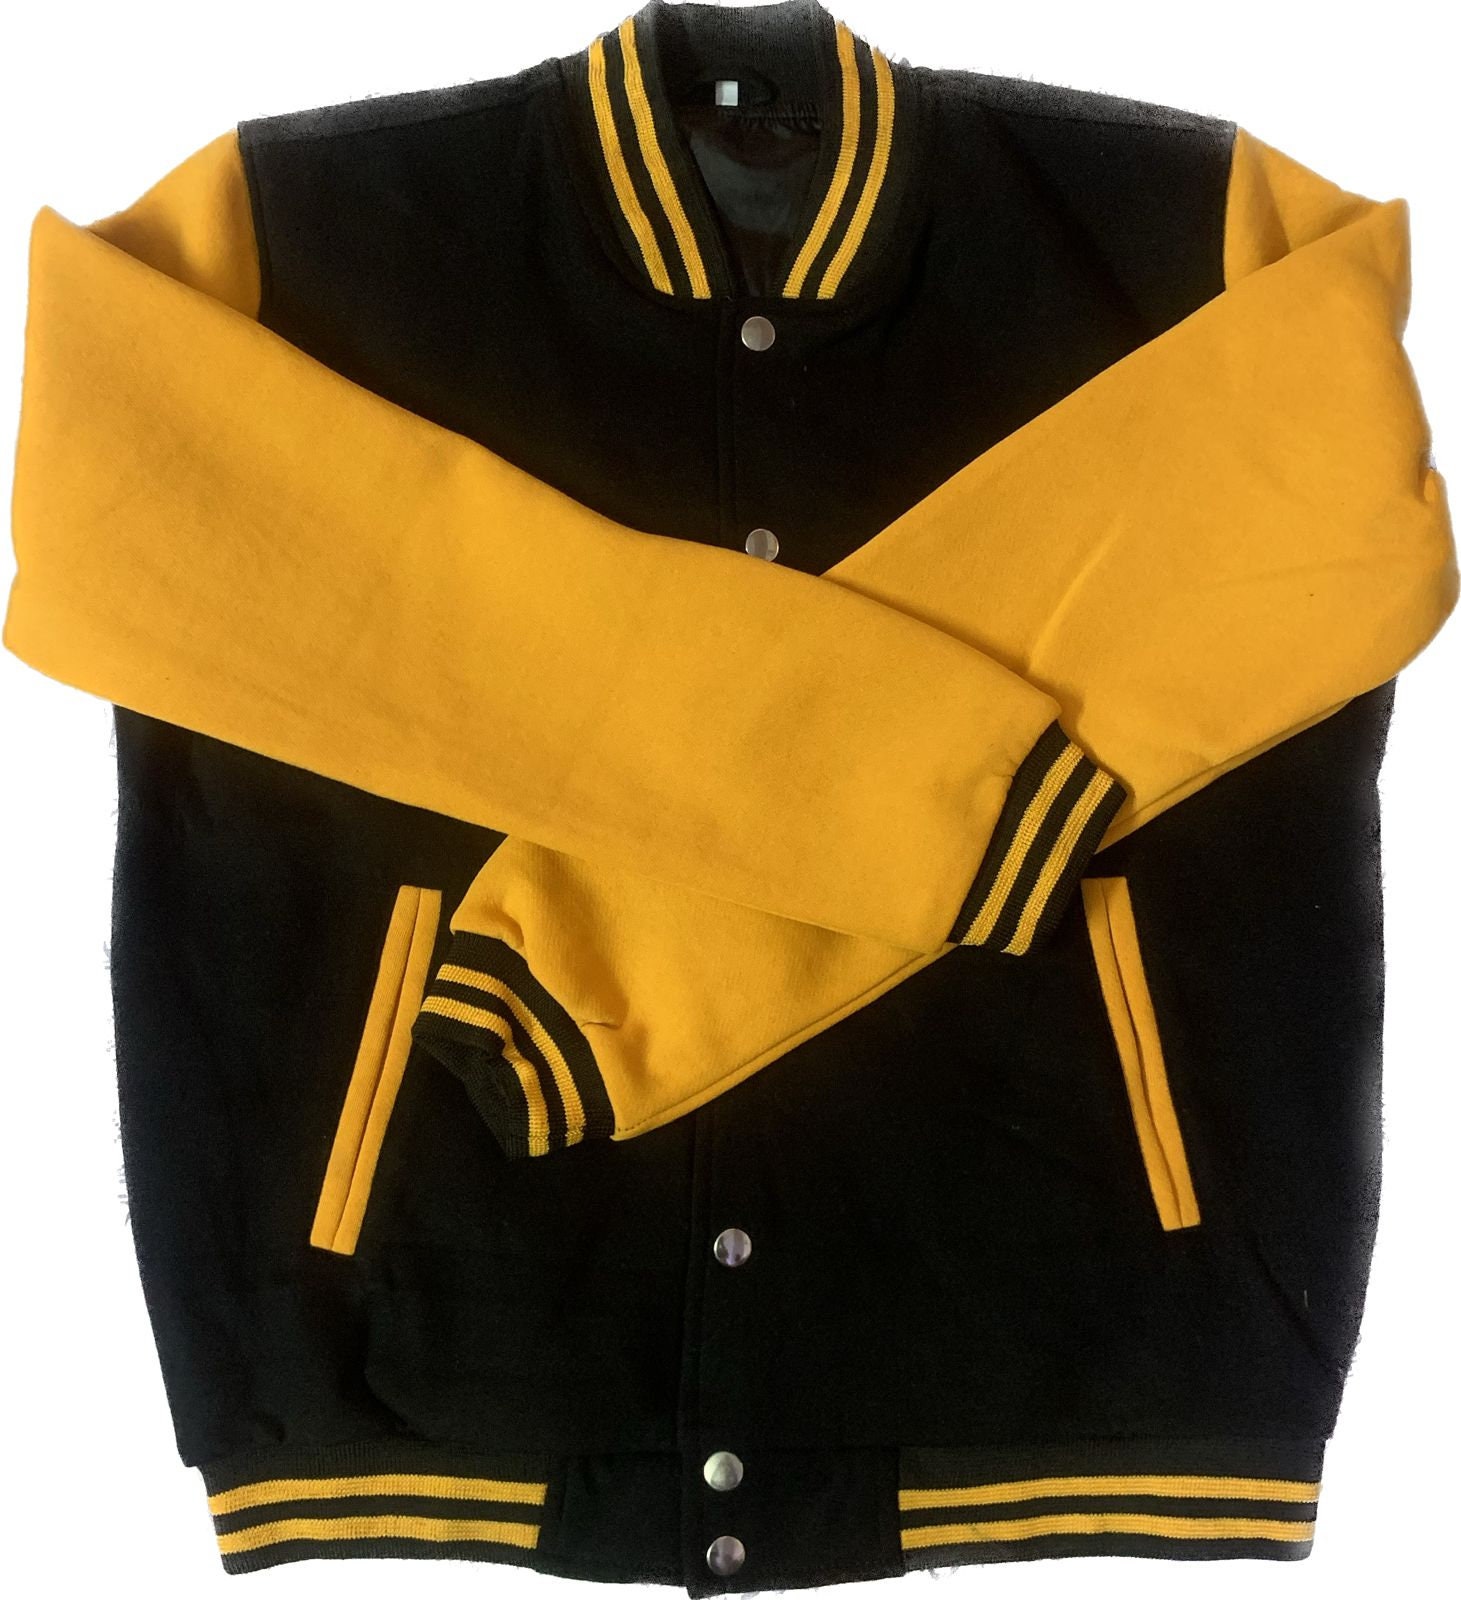 Mens black and yellow varsity jacket - Baseball Bomber Style